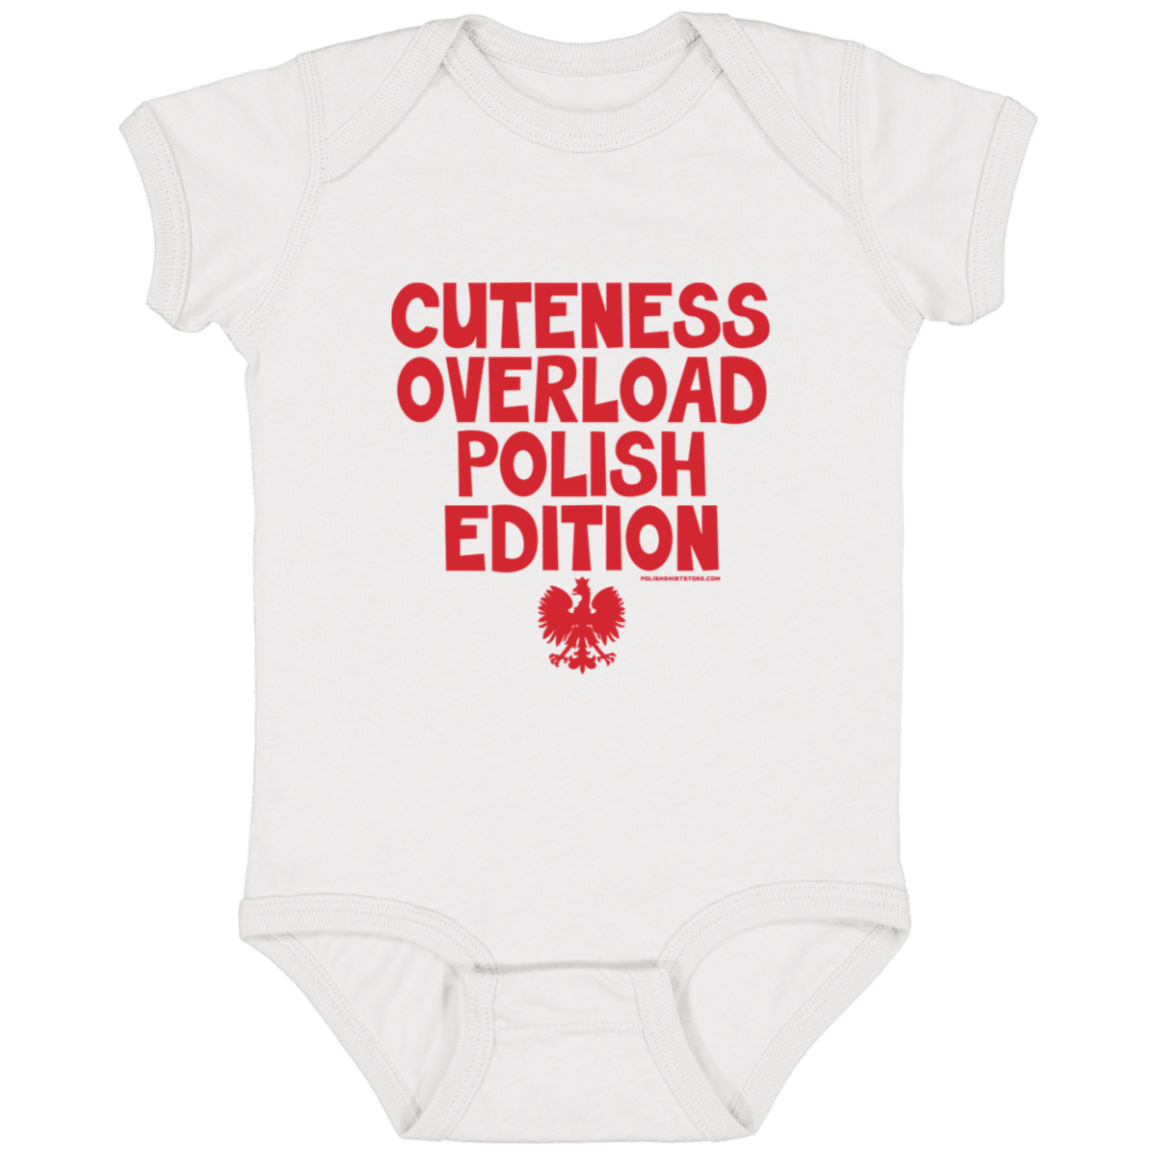 Cuteness Overlaod Polish Edition Infant Bodysuit Baby CustomCat White Newborn 